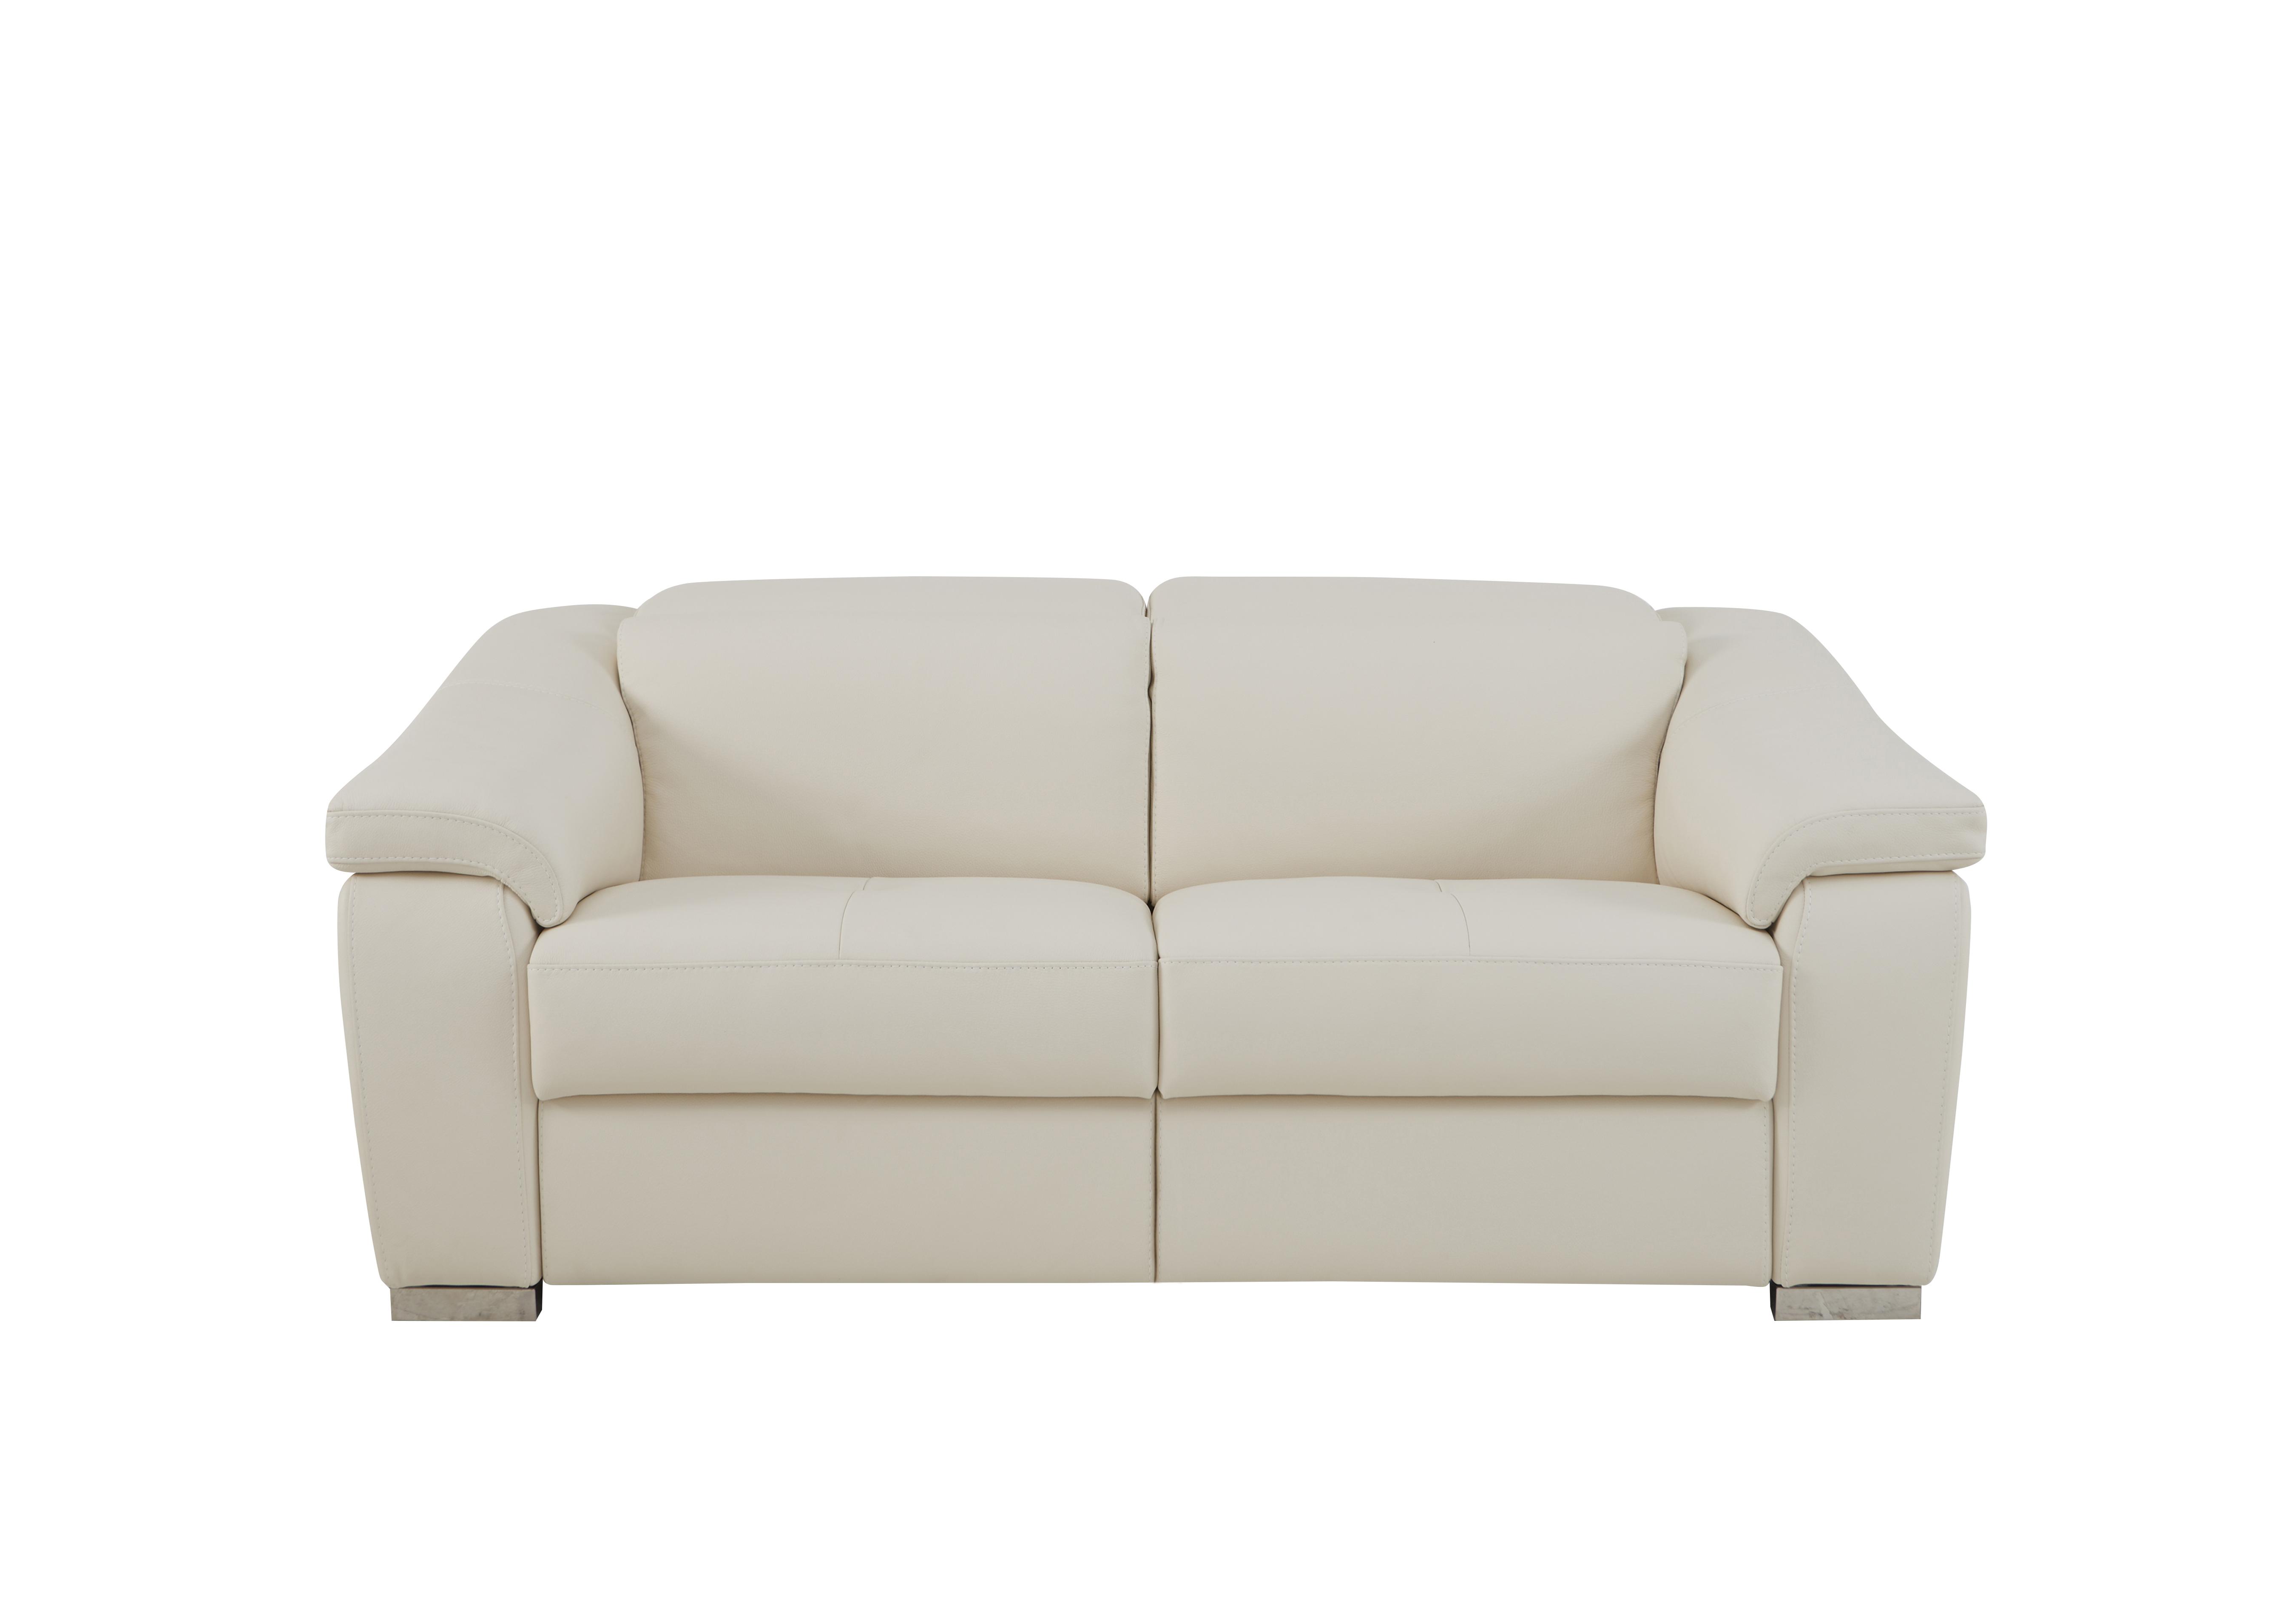 Galileo 2 Seater Leather Sofa in Torello Bianco 93 Ch on Furniture Village